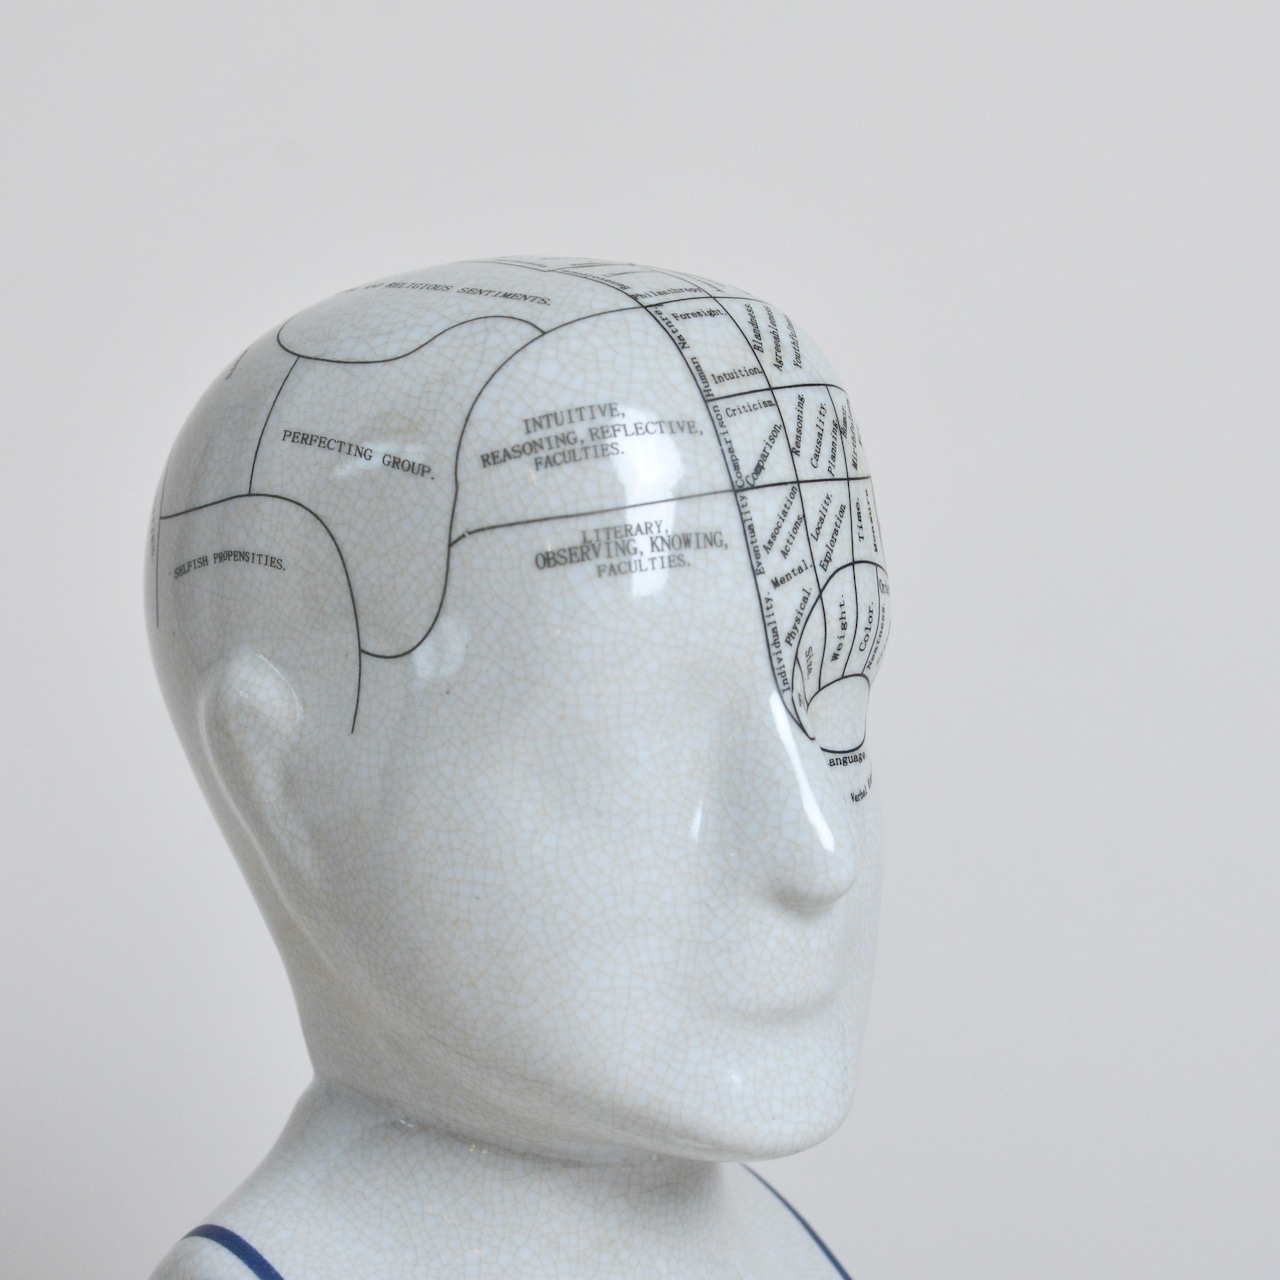 Phrenology Head / フレノロジー ヘッド 【L】〈 模型 / ディスプレイ / オブジェ 〉SB2012-0027